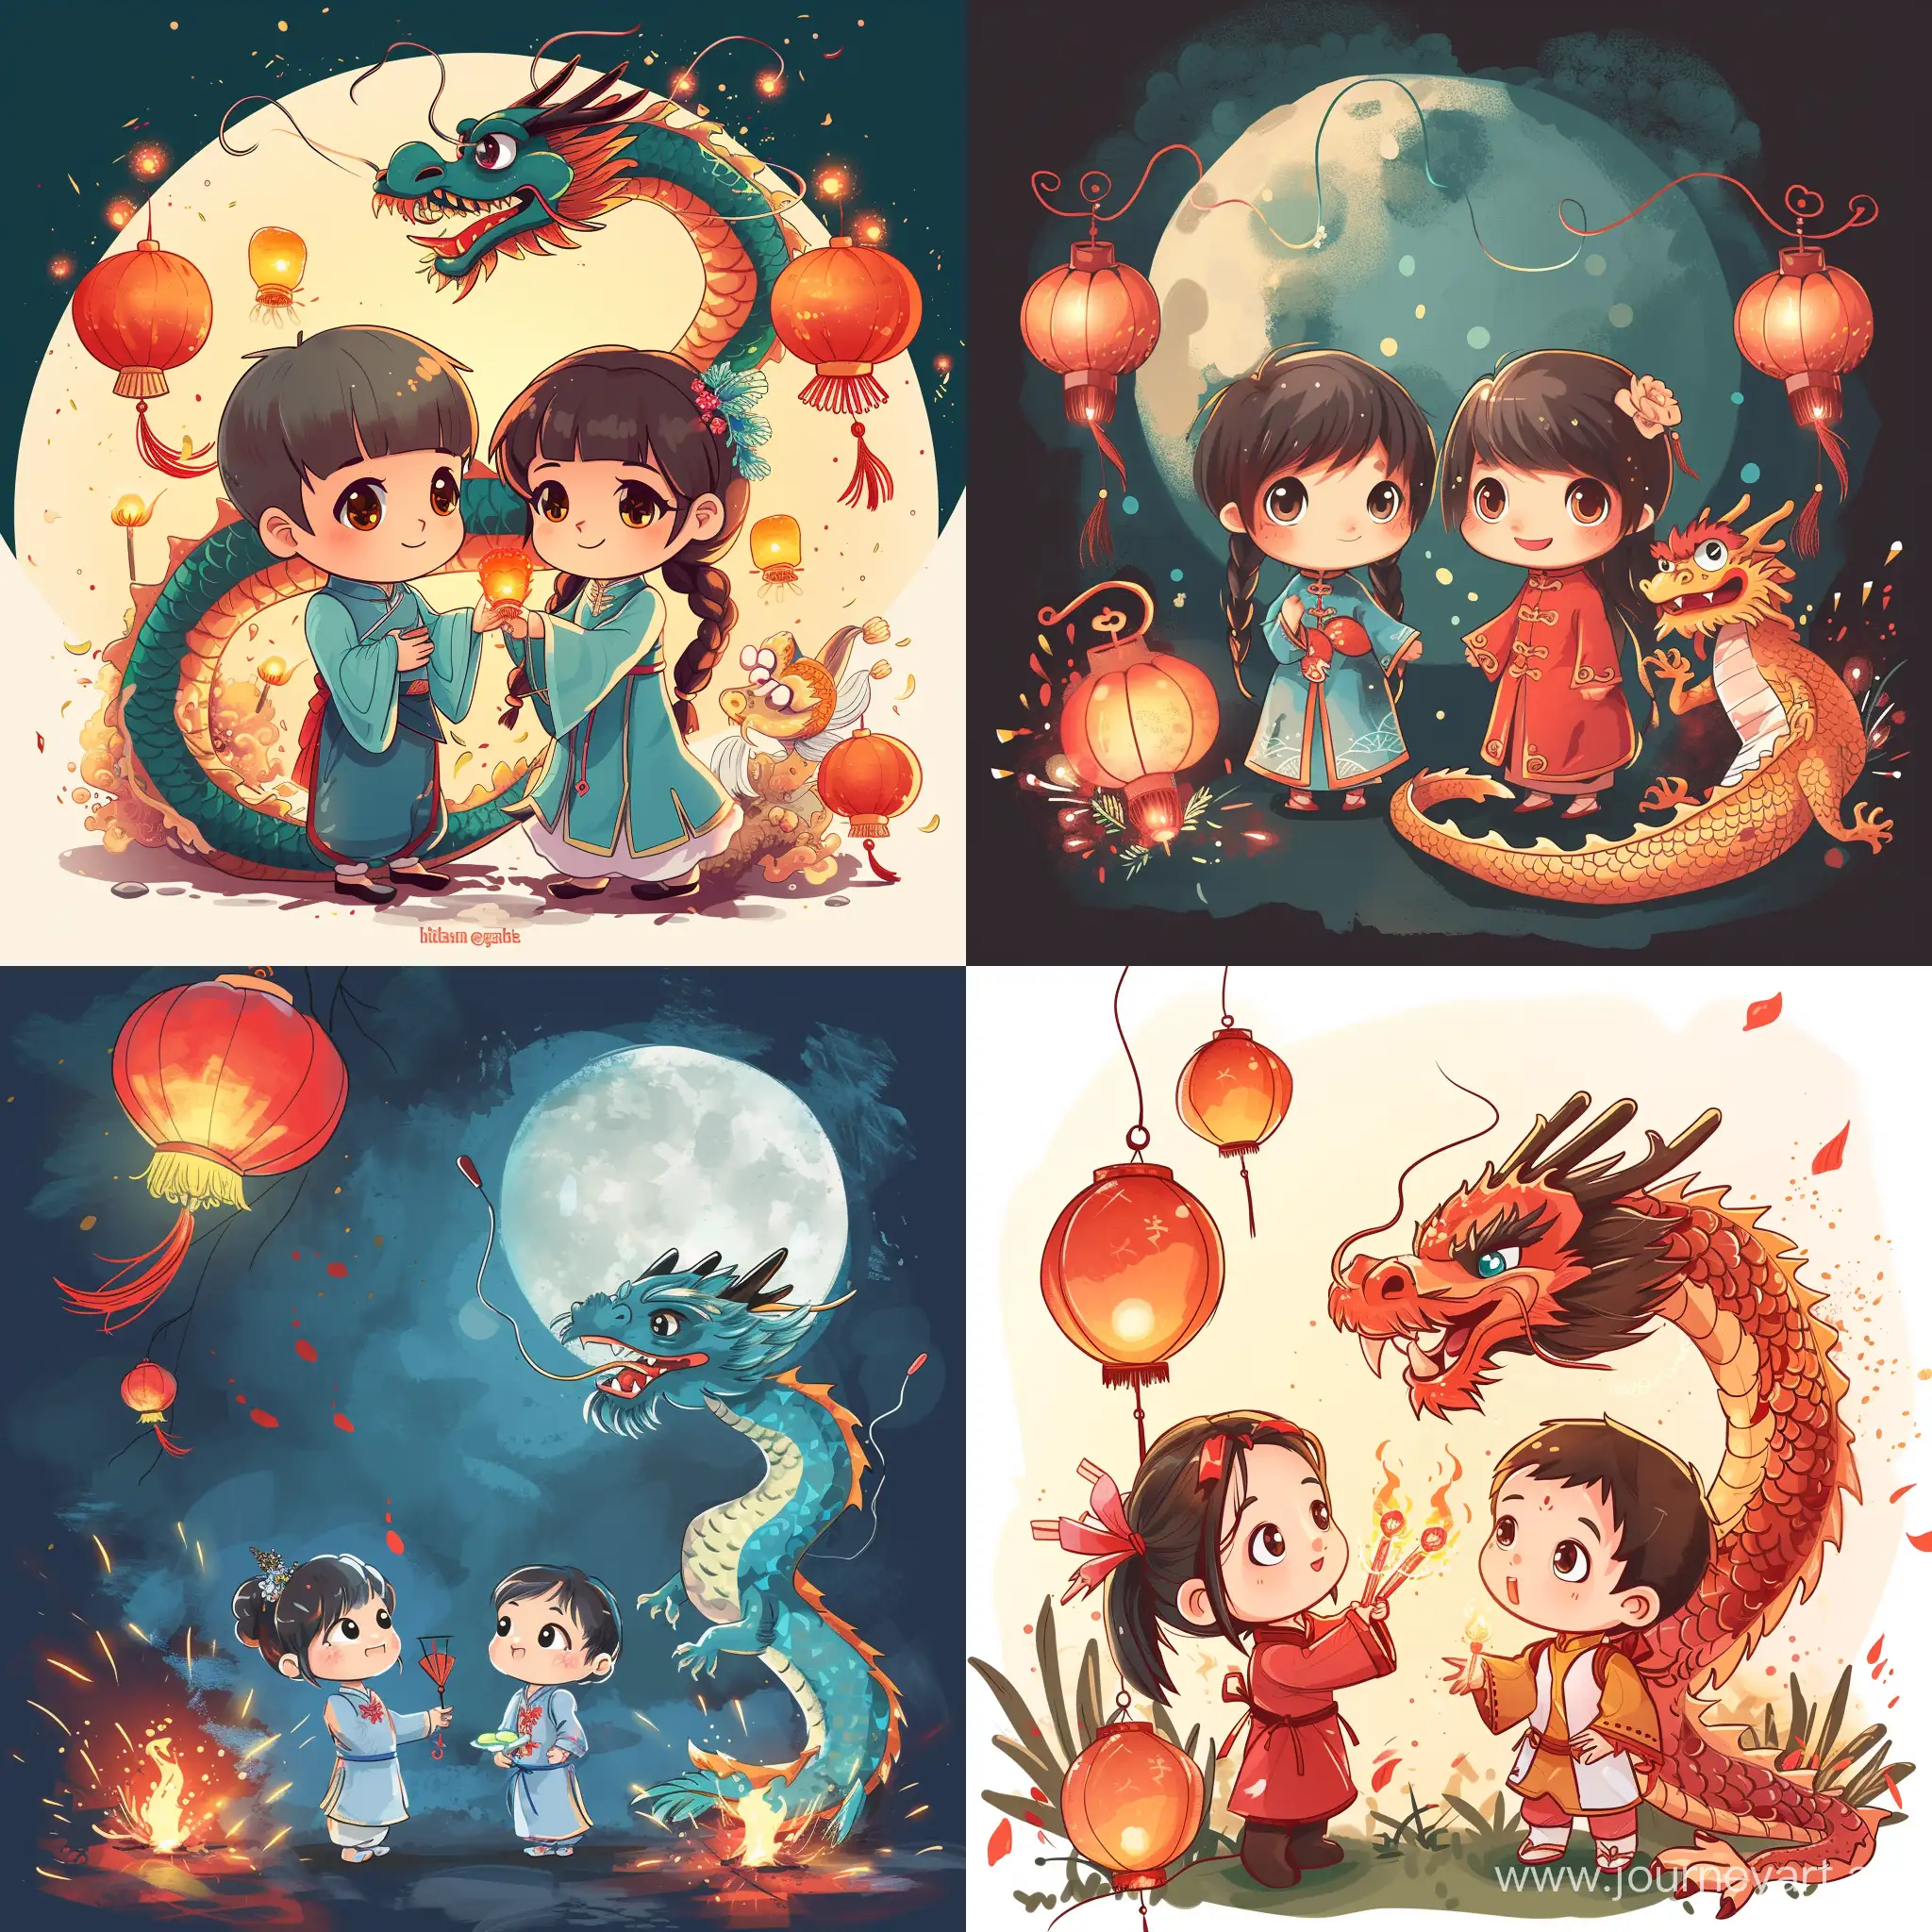 Chibi-Children-Celebrate-Lunar-Festival-with-Dragon-Vibrant-Lanterns-and-Firecrackers